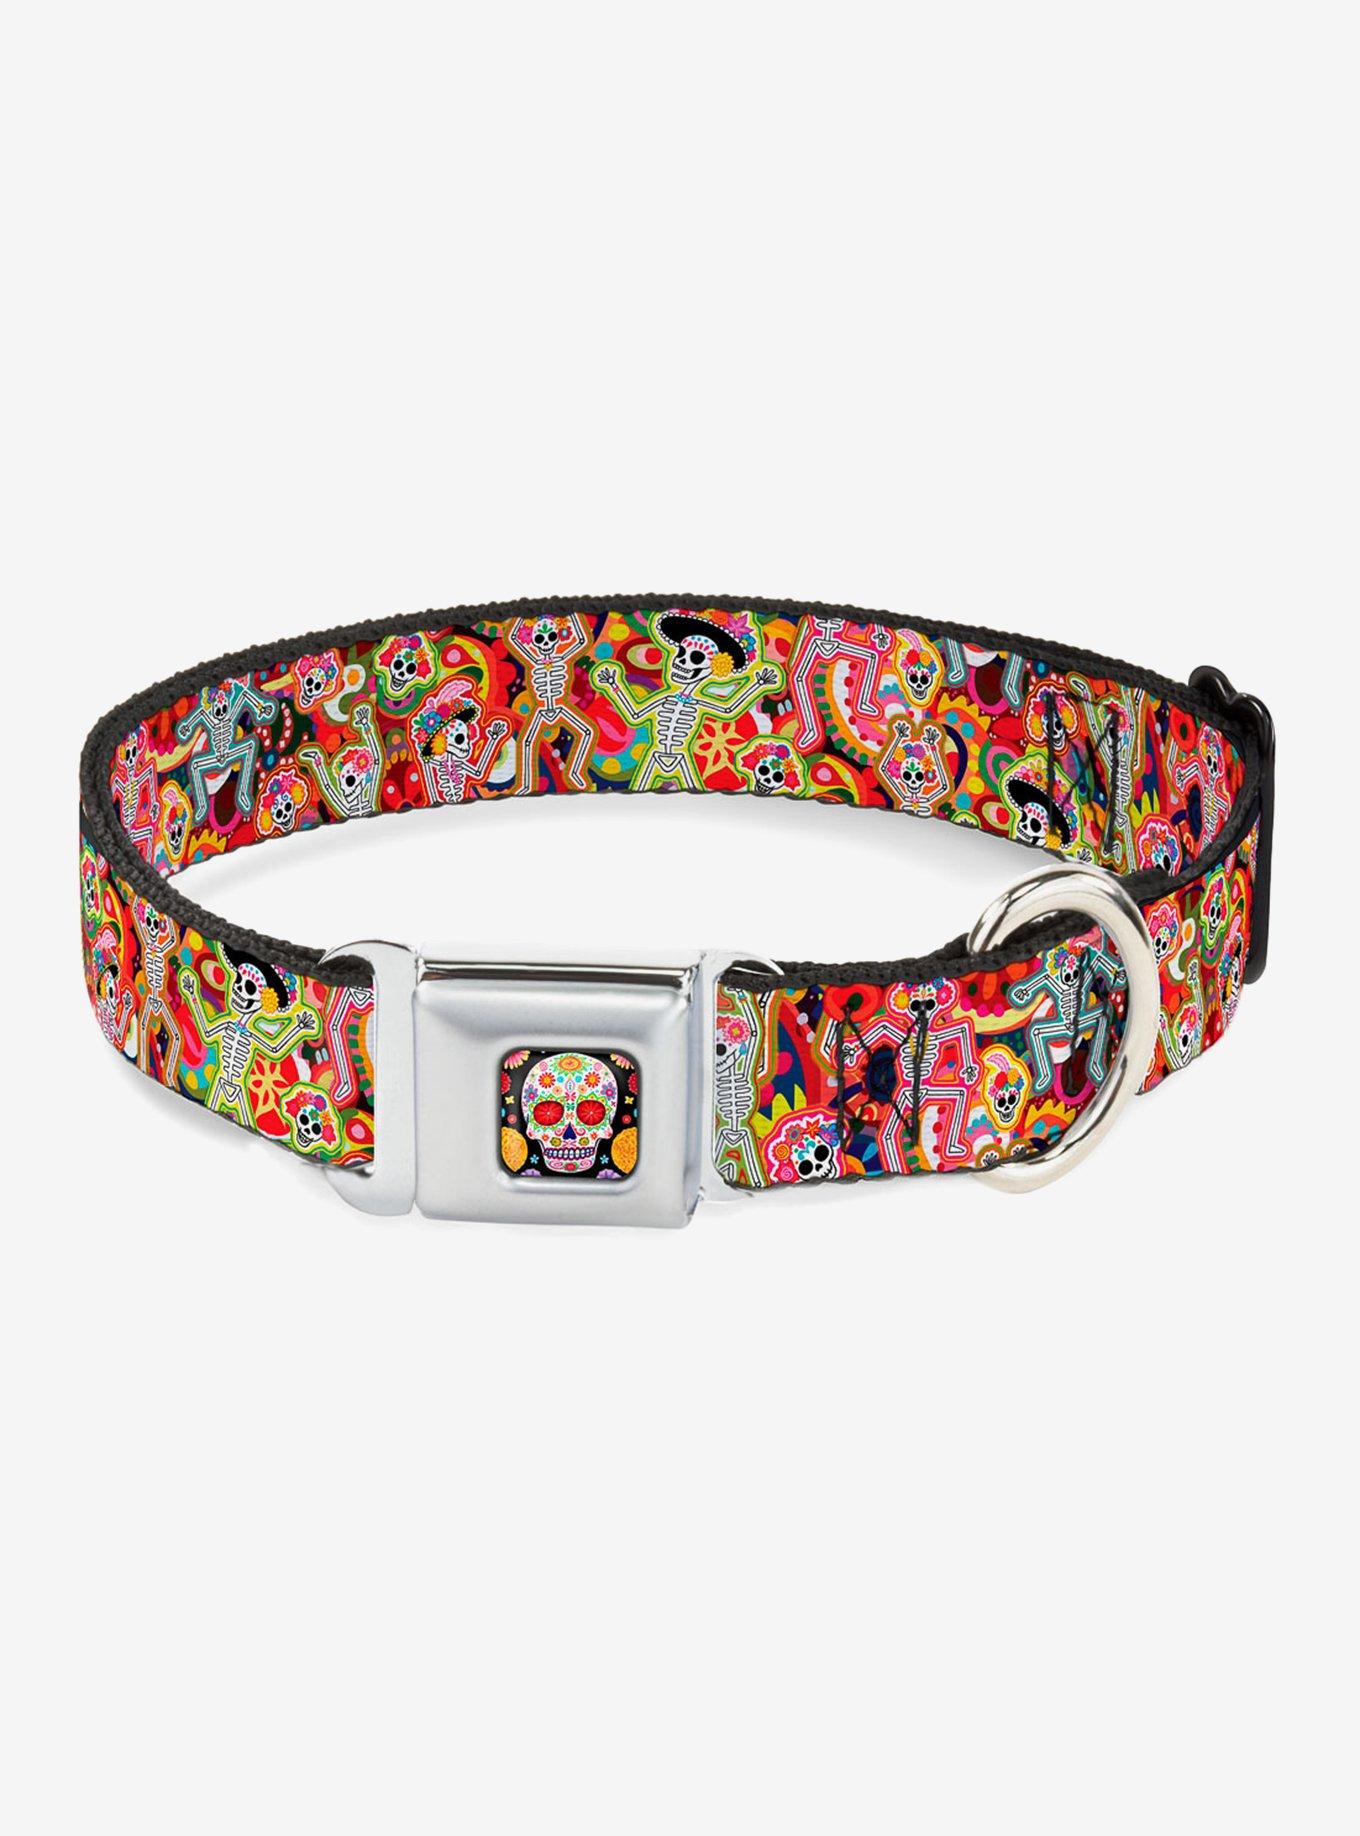 Dancing Catrinas Collage Multi Color Seatbelt Buckle Dog Collar, , hi-res